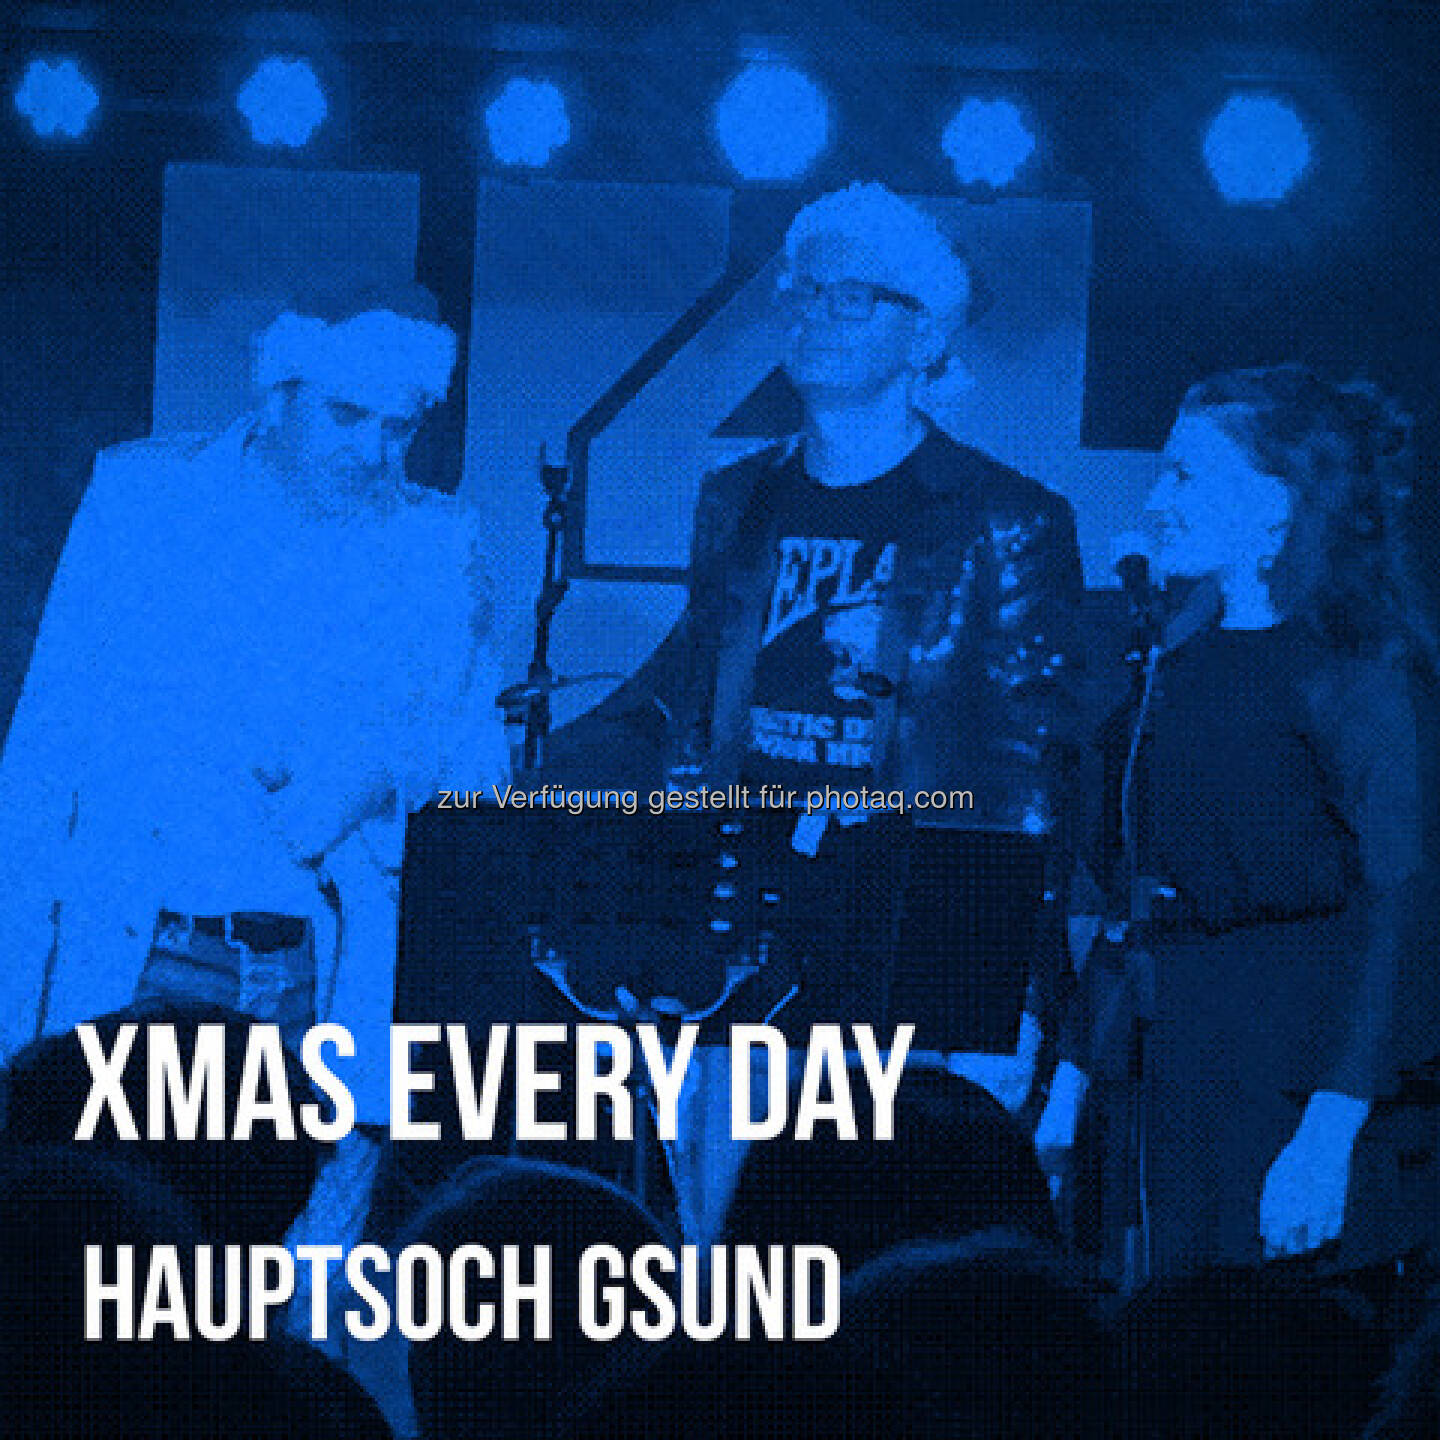 Xmas every day von Hauptsoch Gsund auf http://www.boerse-social.com/podcasts 